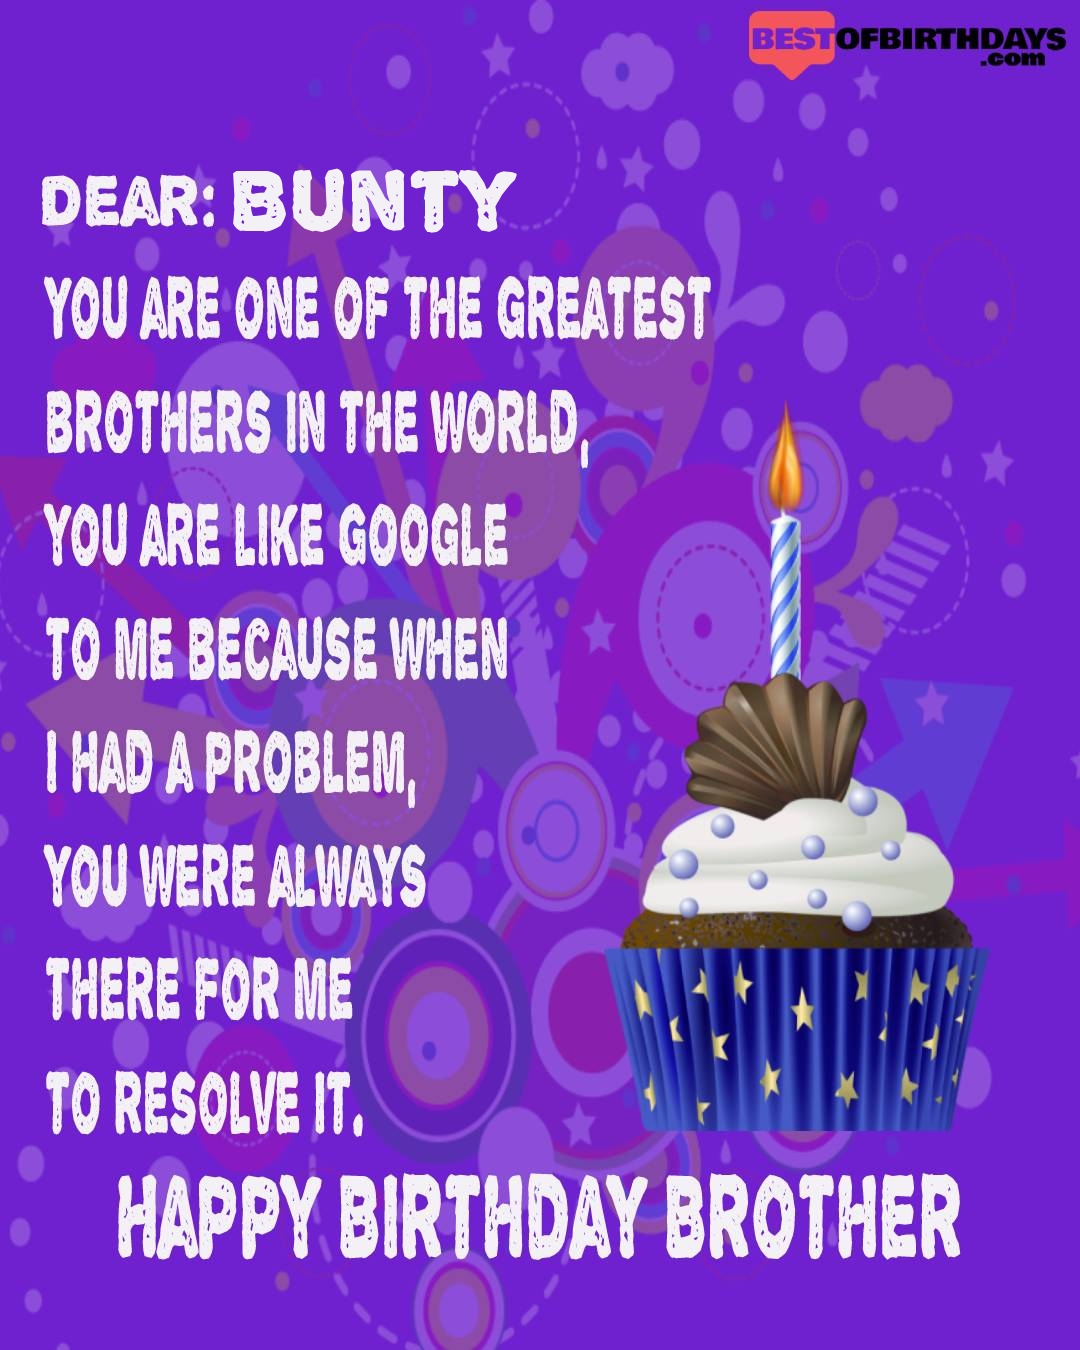 Happy birthday bunty bhai brother bro